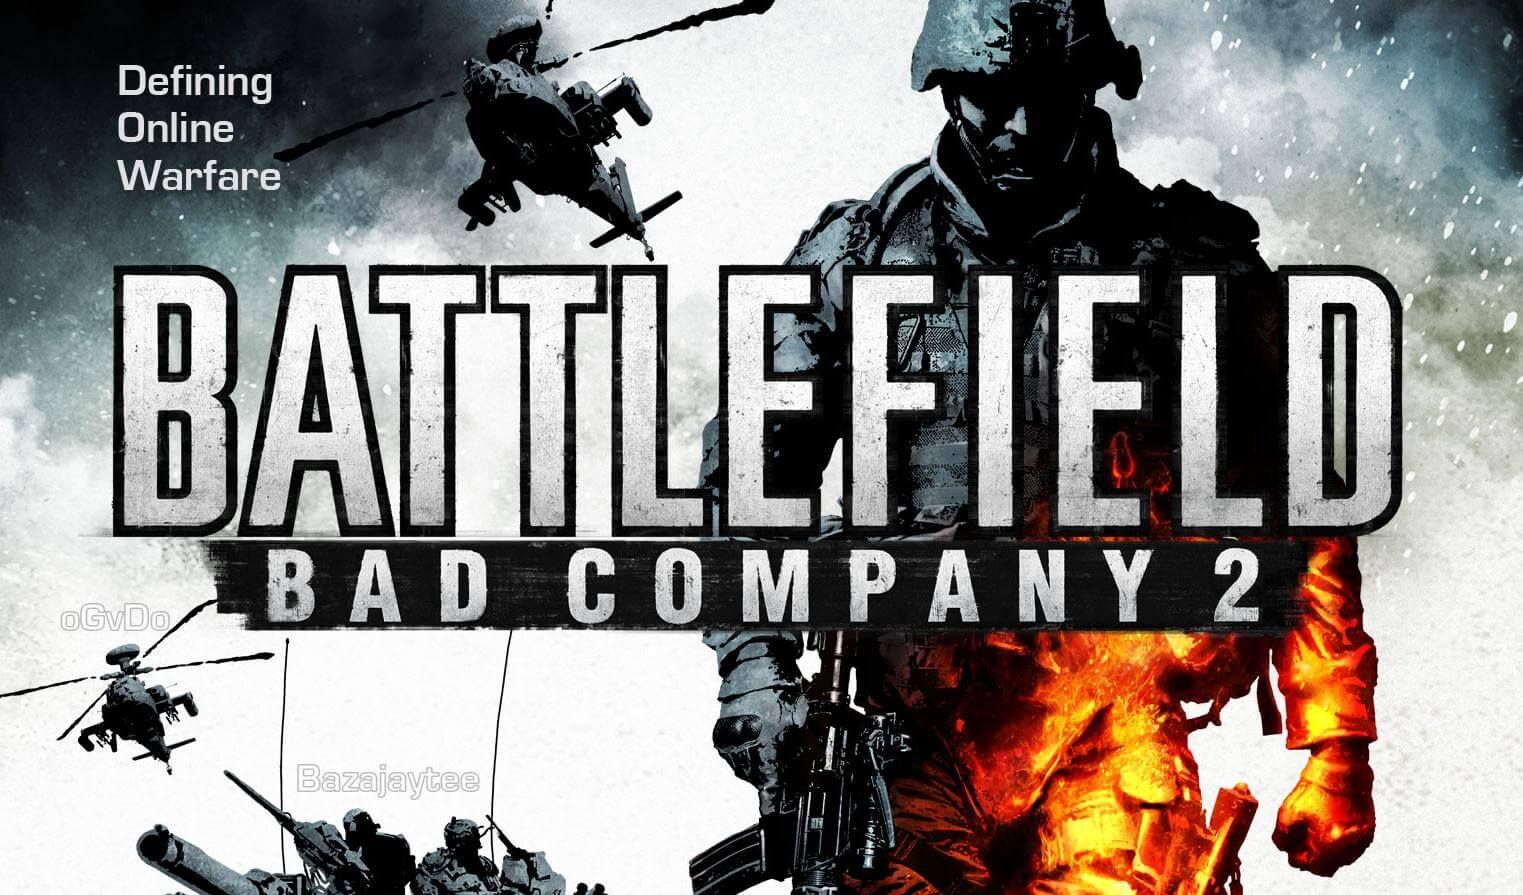 do people still play battlefield bad company 2 online?